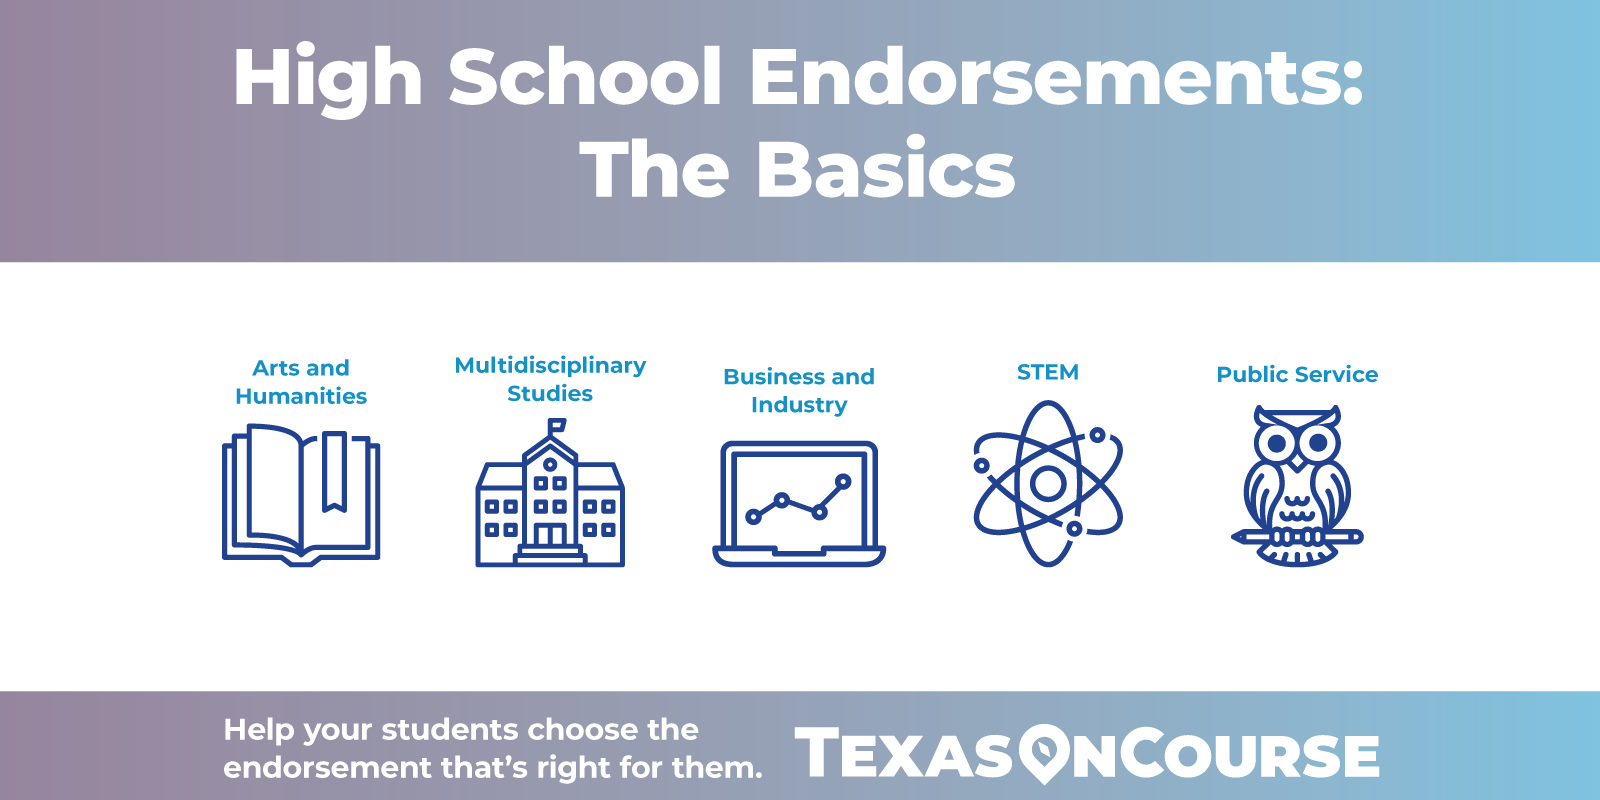 High School Endorsements The Basics